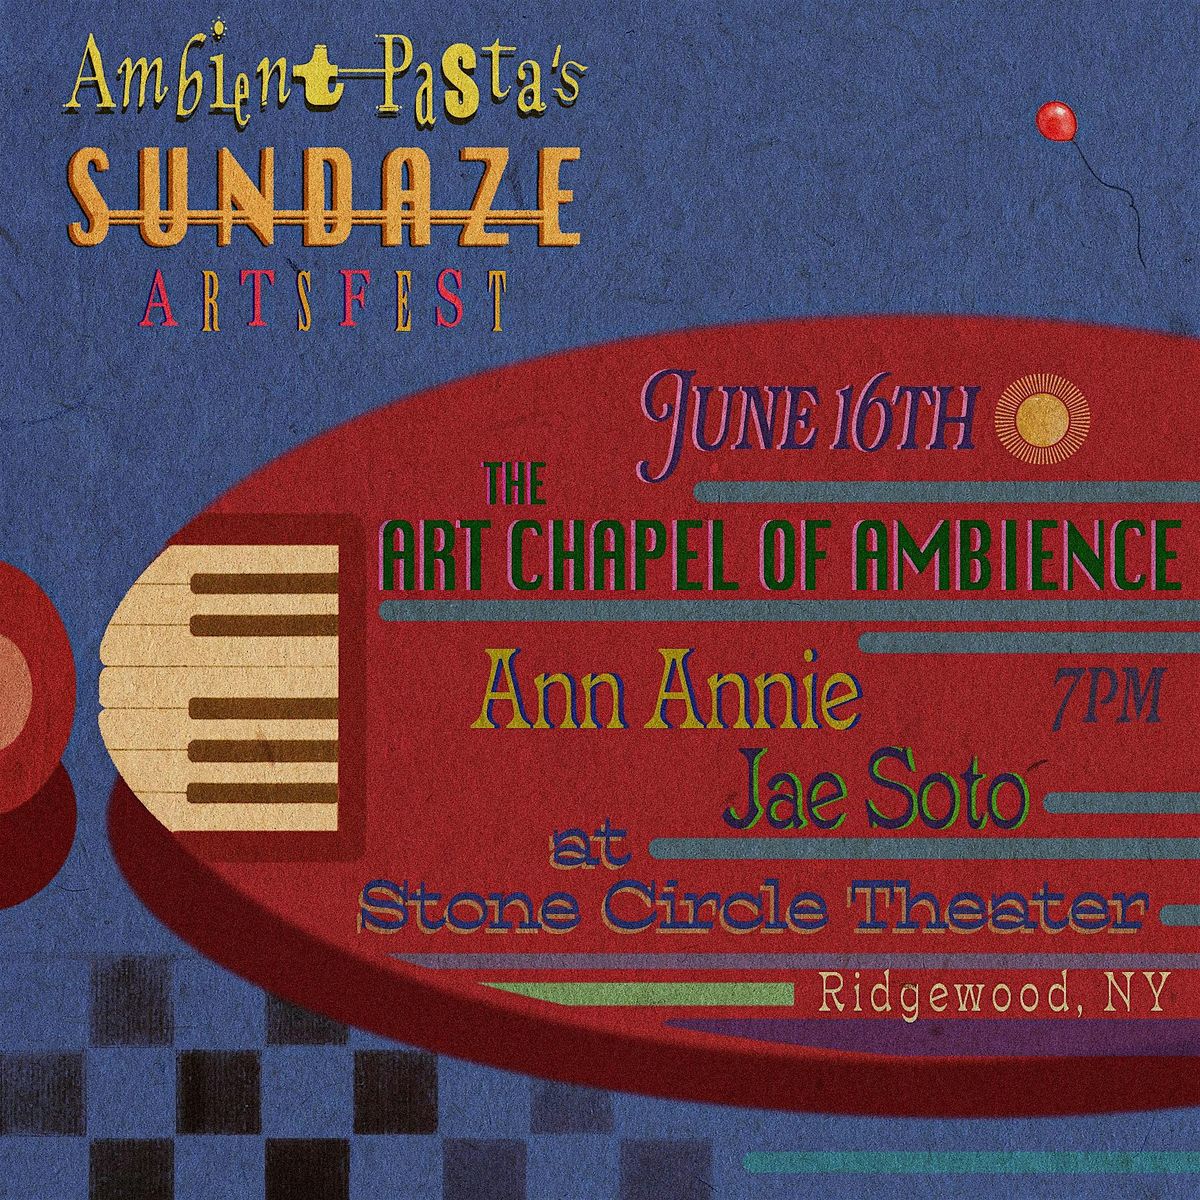 The Art Chapel of Ambience: Ann Annie, Jae Soto.